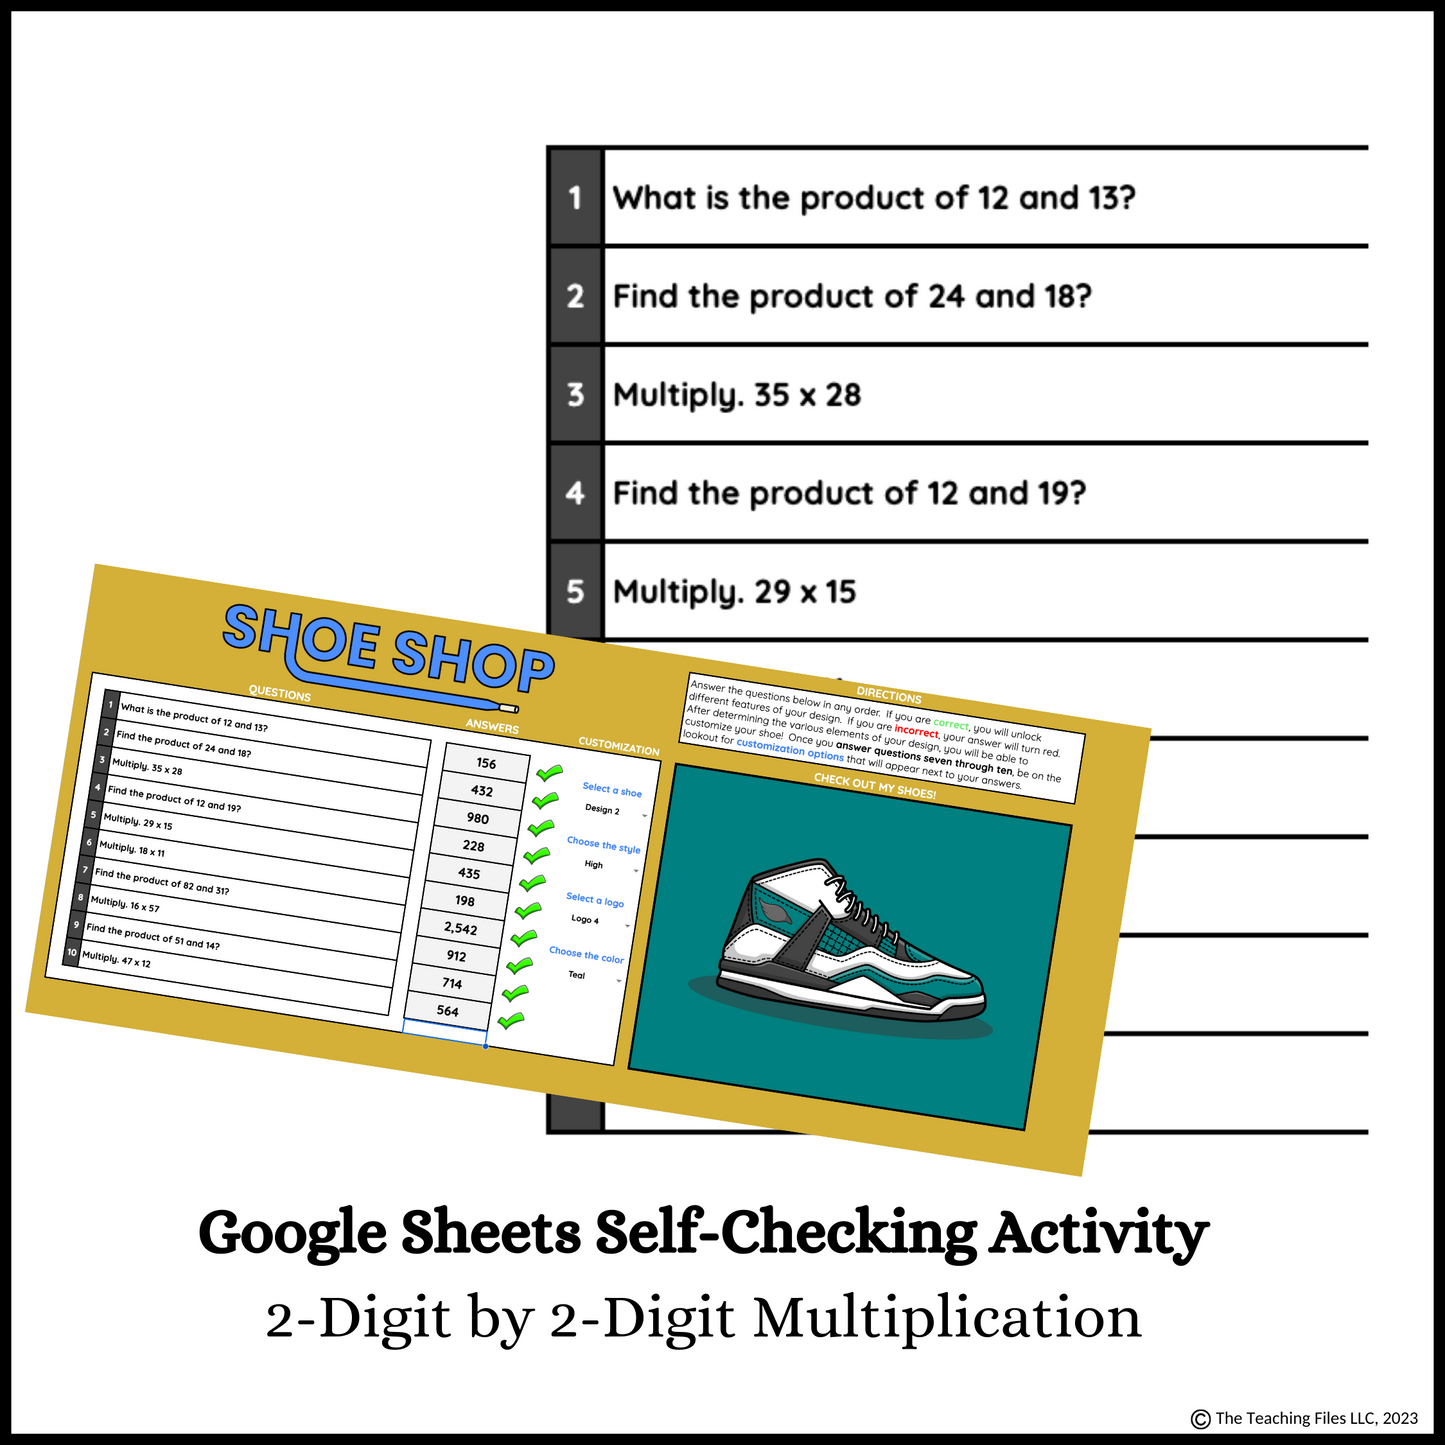 2-Digit by 2-Digit Multiplication Digital Self-Checking Activity